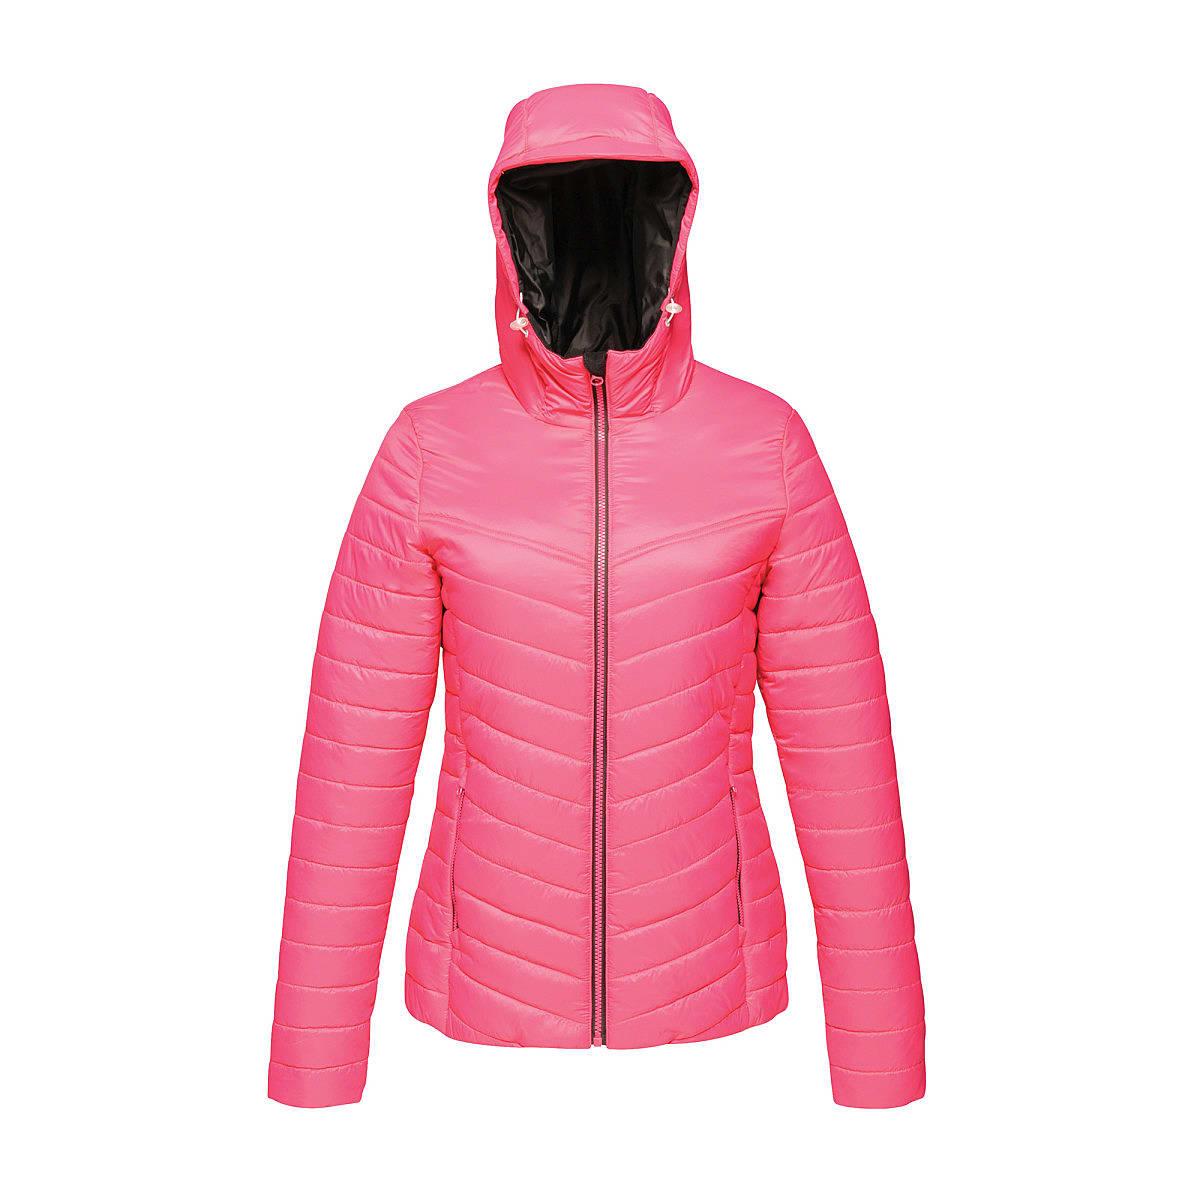 Regatta Womens Acadia II Jacket in Hot Pink / Black (Product Code: TRA421)